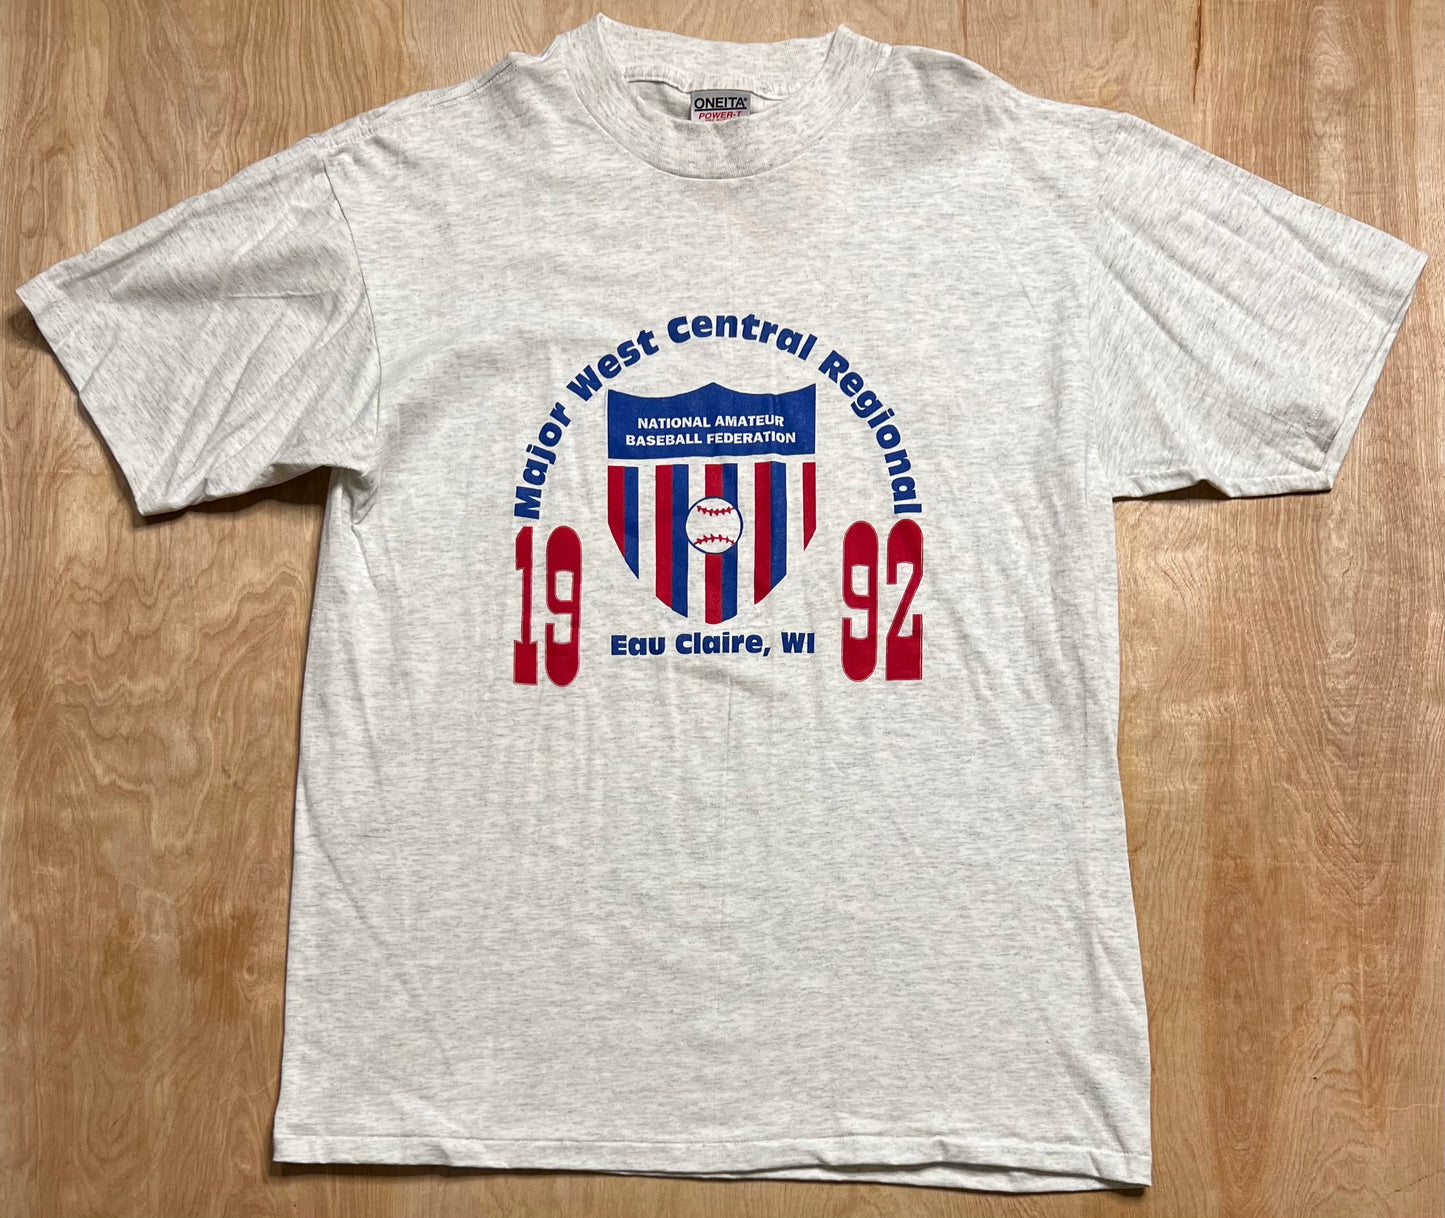 1992 National Amateur Baseball Federation Eau Claire, WI Single Stitch T-Shirt